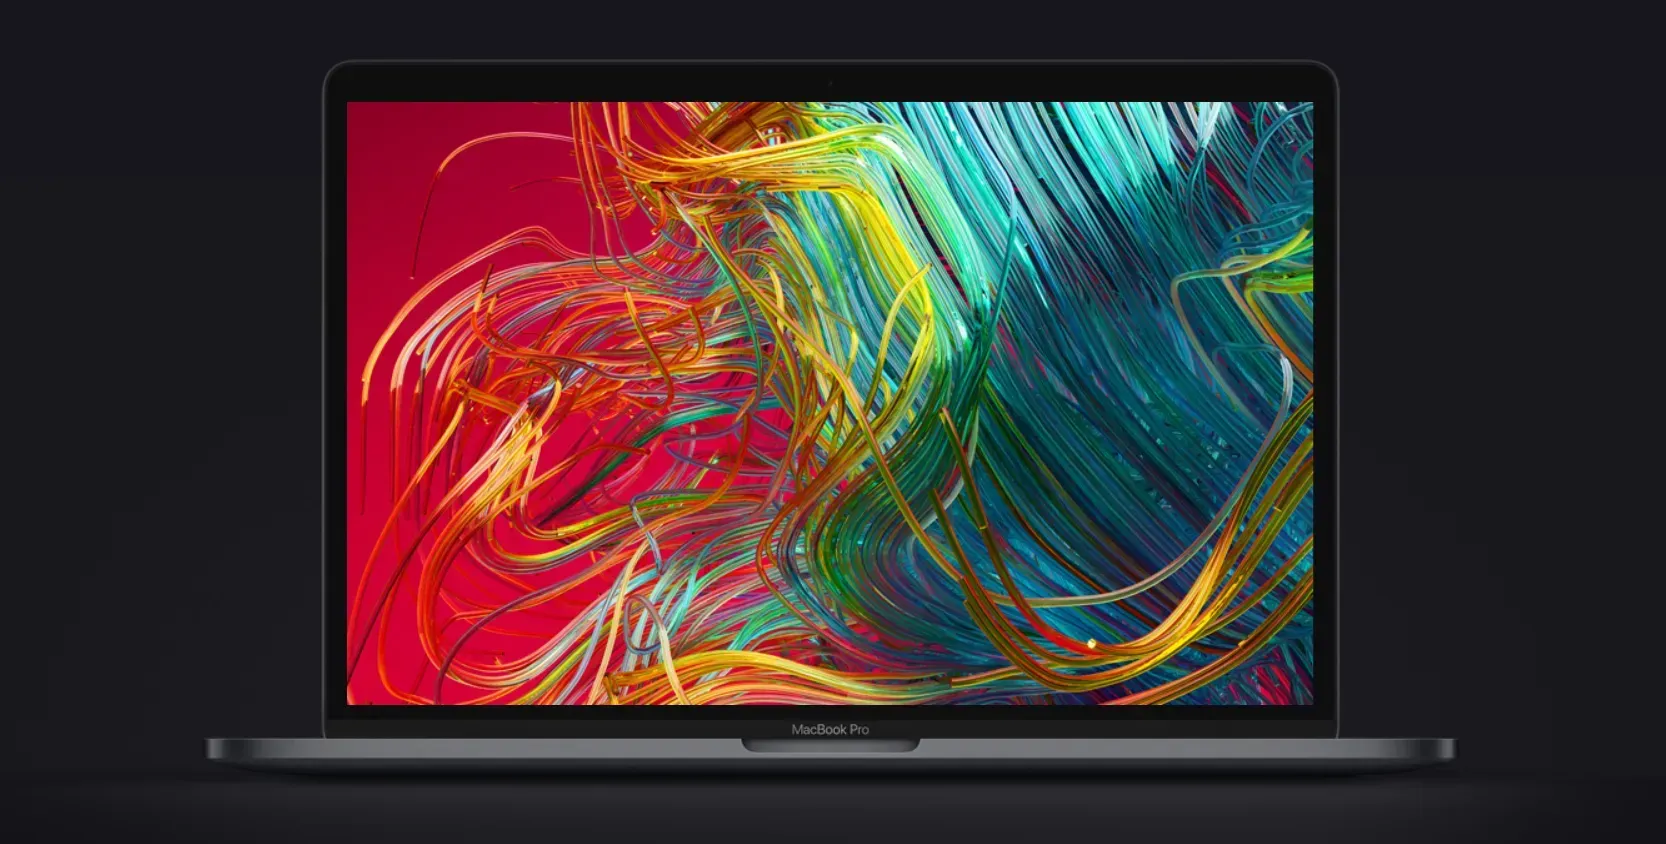 Дисплеи mini-LED для MacBook Pro начнут производить в III квартале 2021 года